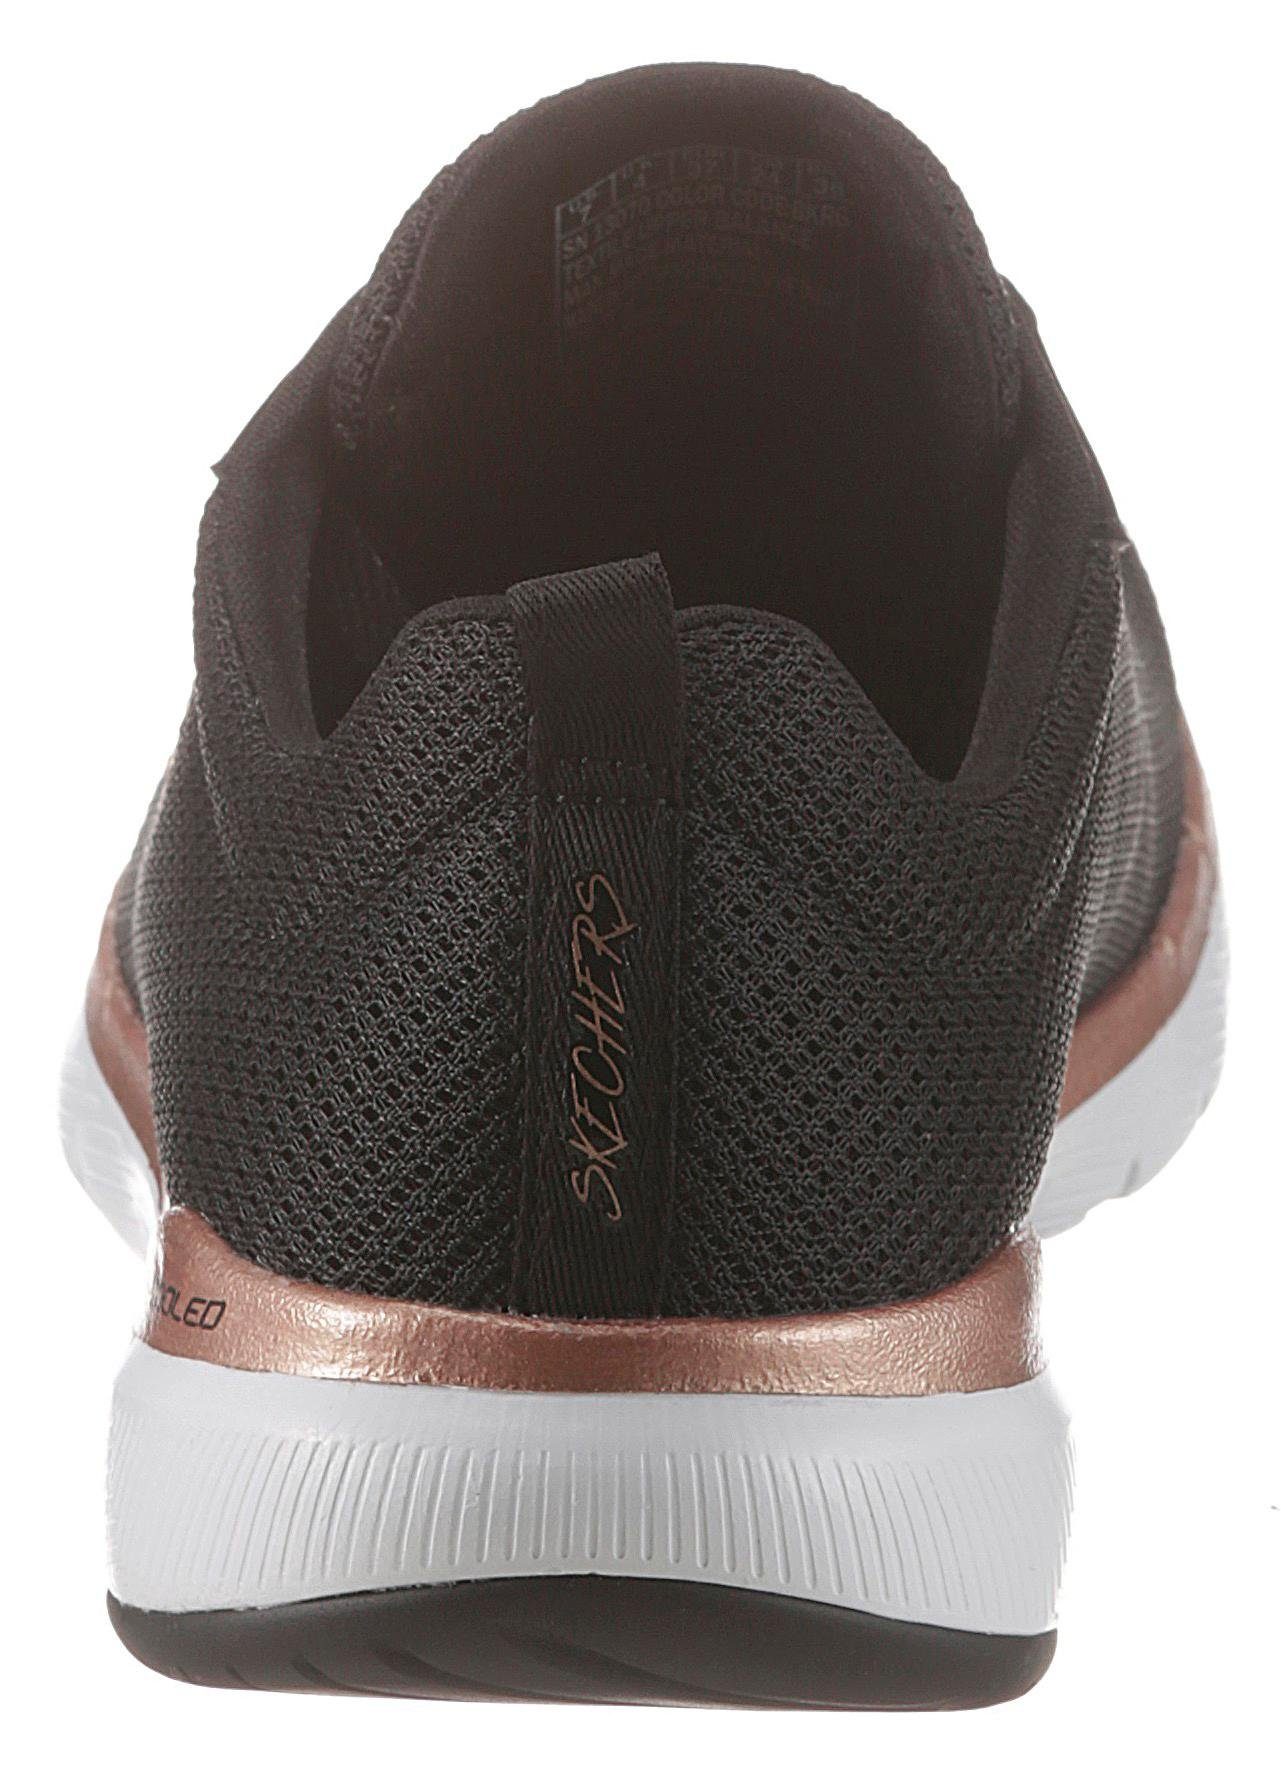 - First mit Skechers Flex schwarz-rosa Sneaker 3.0 Appeal Ausstattung Insight Foam Memory